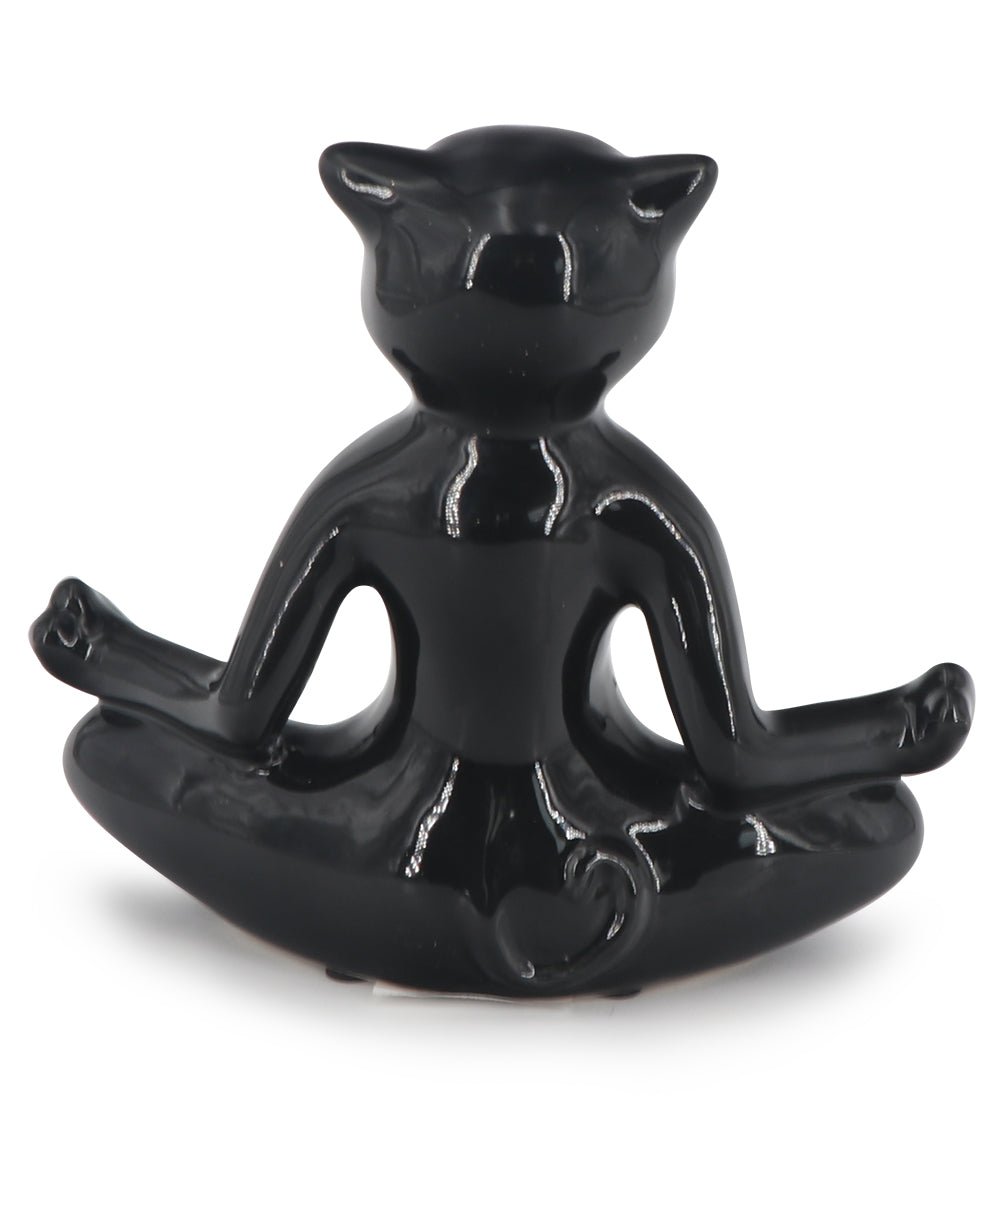 Meditating Yoga Cat Statue in Black - Sculptures & Statues